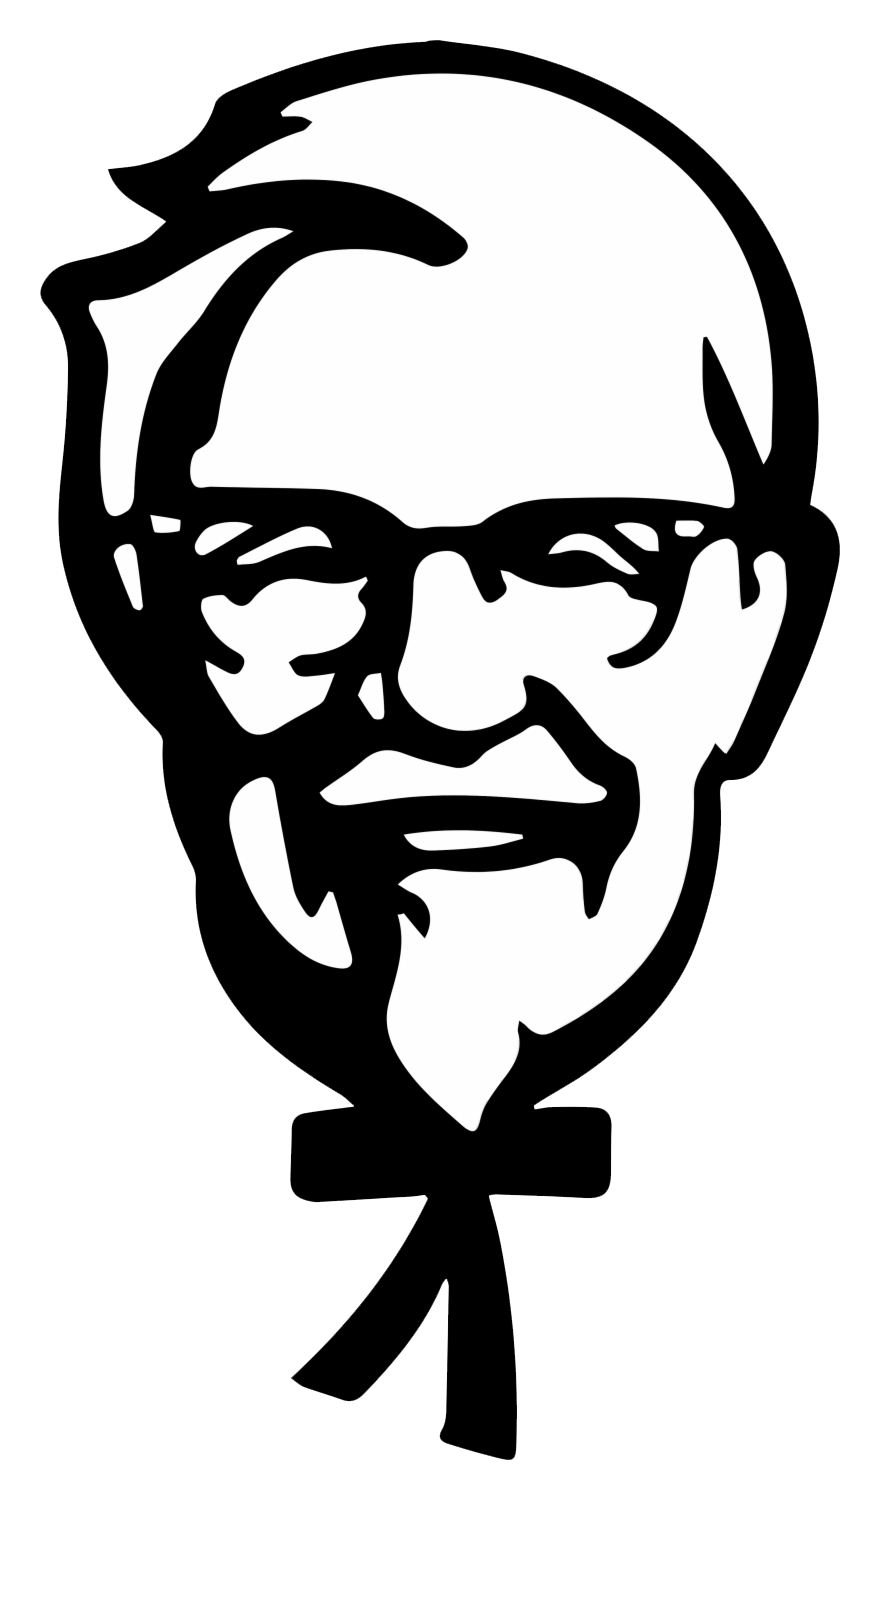 KFC Logo Transparent Image